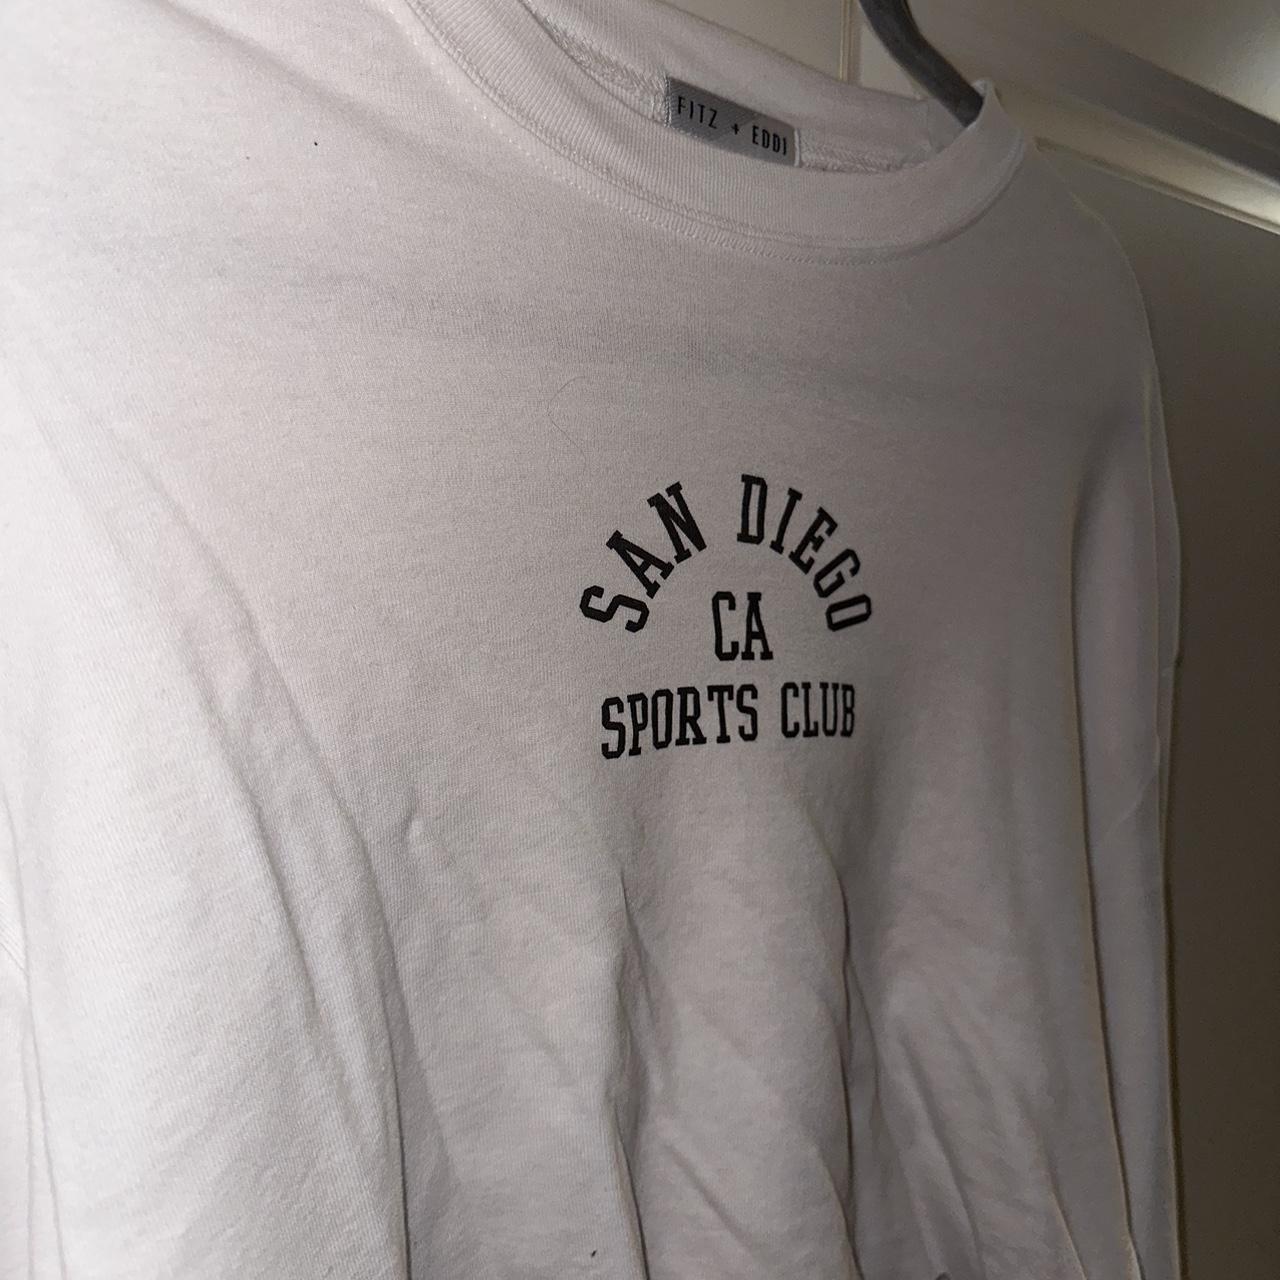 FITZ + EDDI Fitz + Eddi Sports Club Cropped T-shirt in White